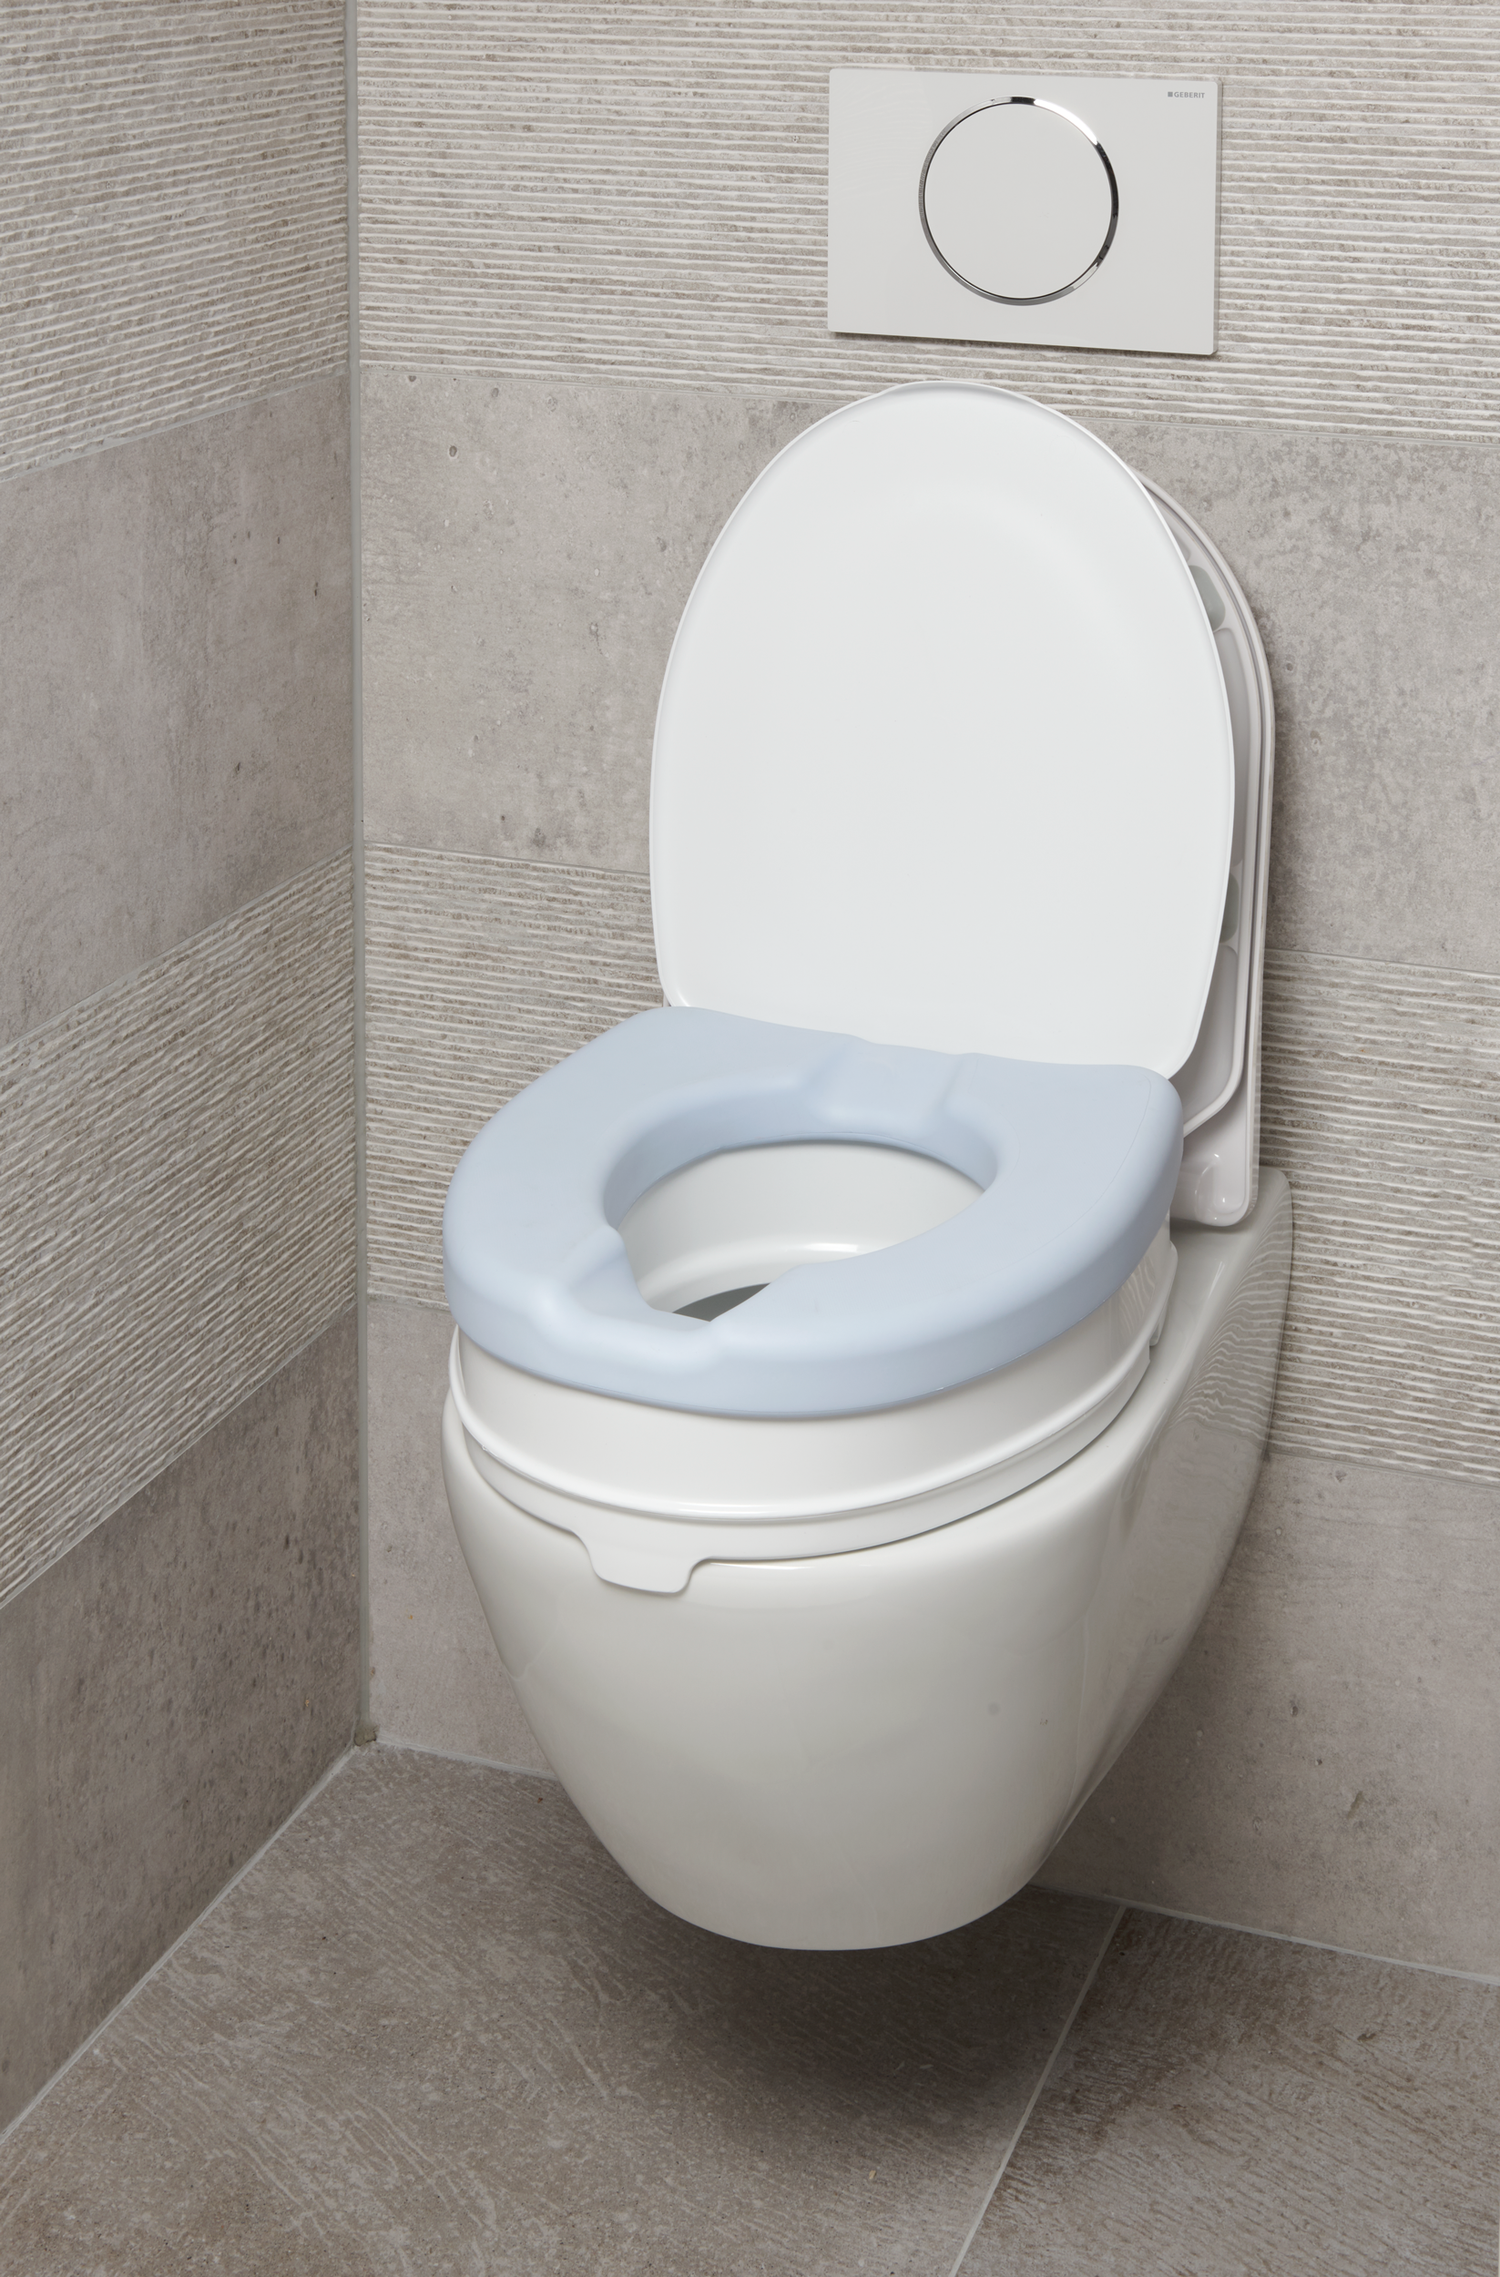 SecuCare Comfort cushion for toilet seat raiser